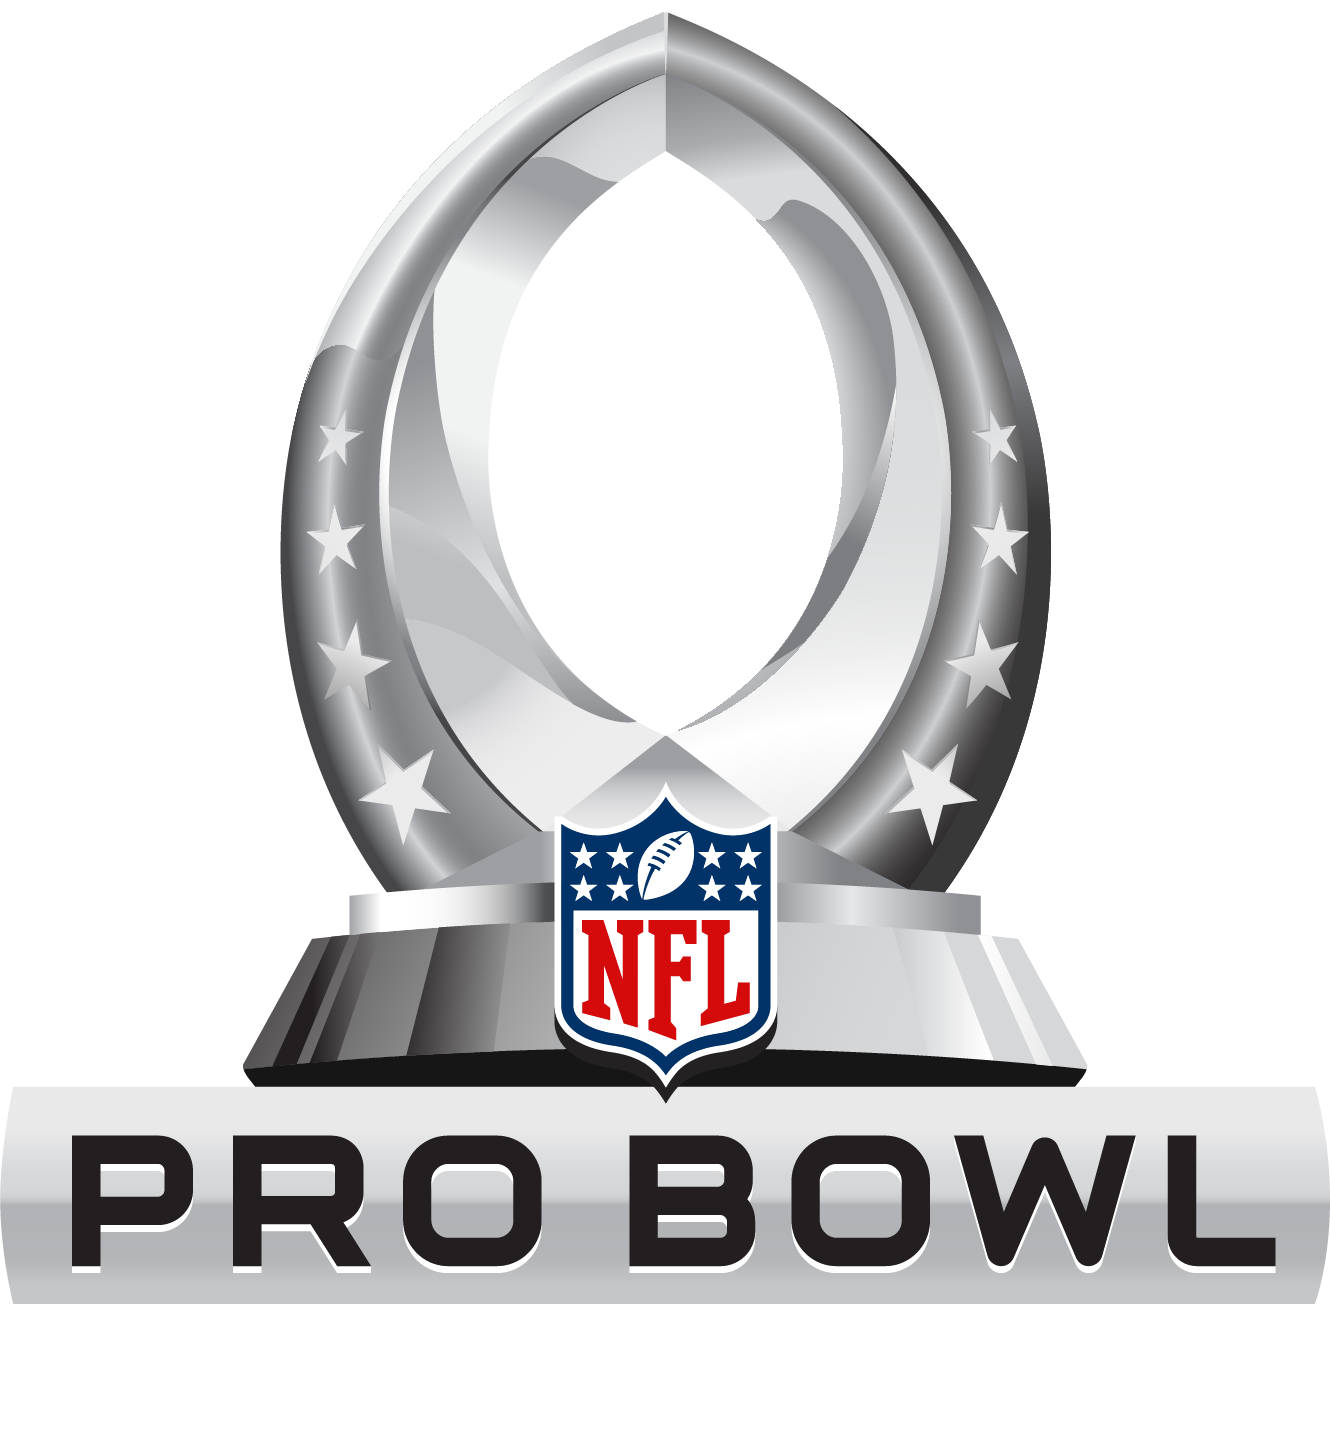 Pro Bowl 2019 Live Stream. AFC vs NFC Live Stream Online. How to Watch Pro Bowl 2019 Live Stream Online.